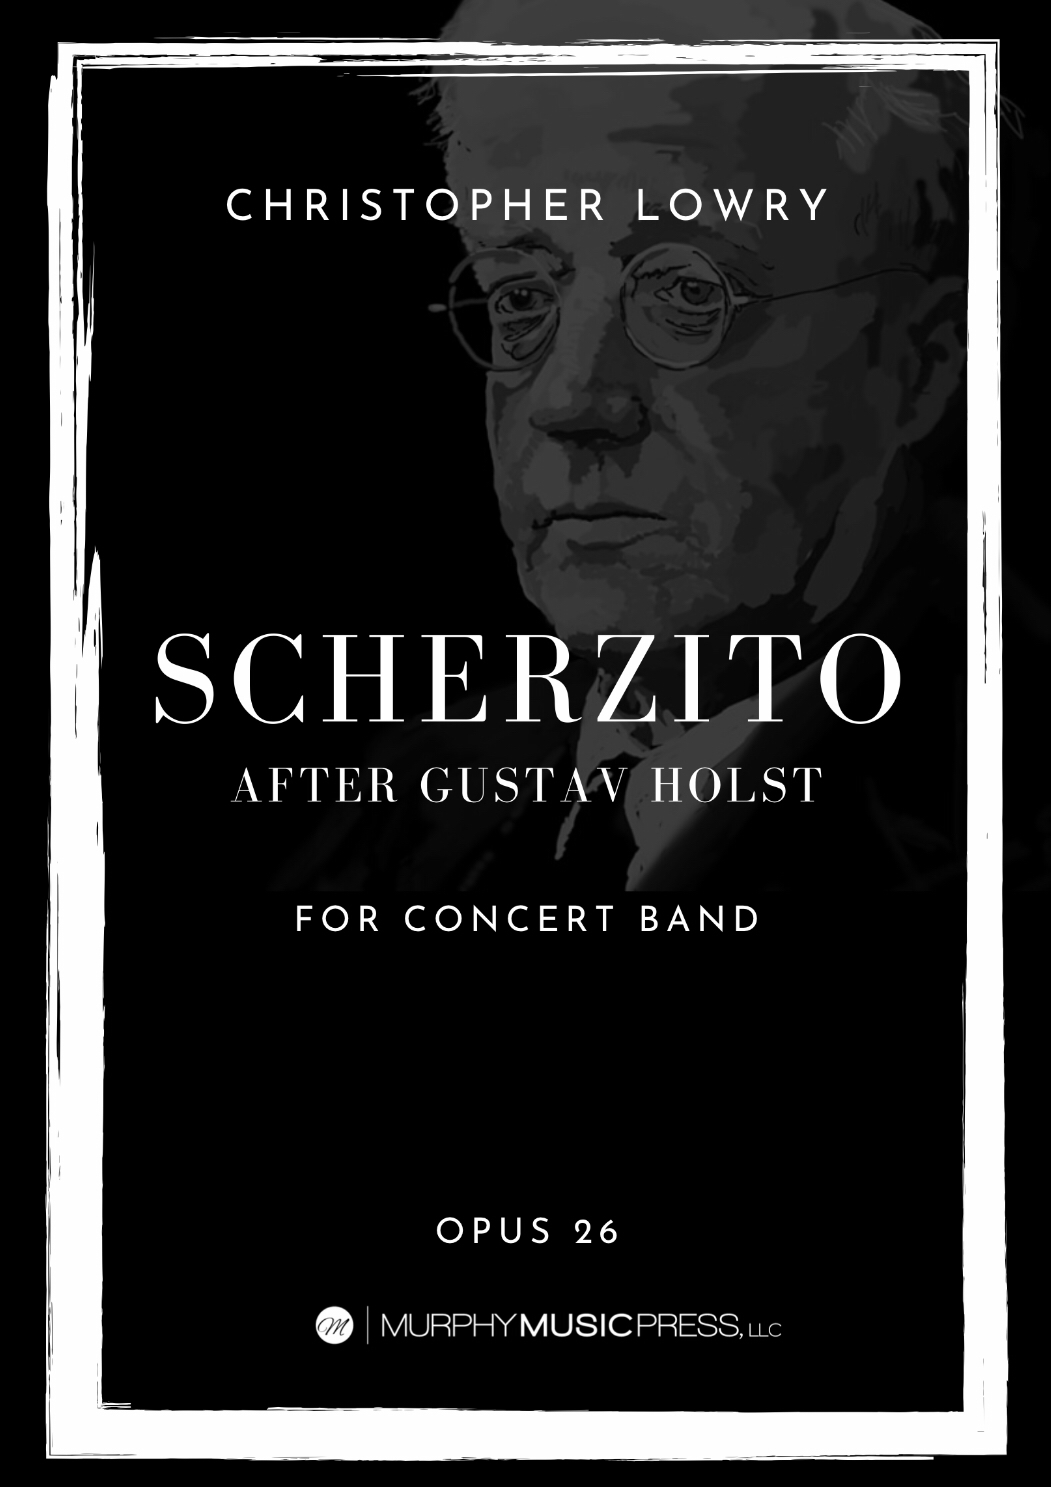 Scherzito After Gustav Holst by Christopher Lowry